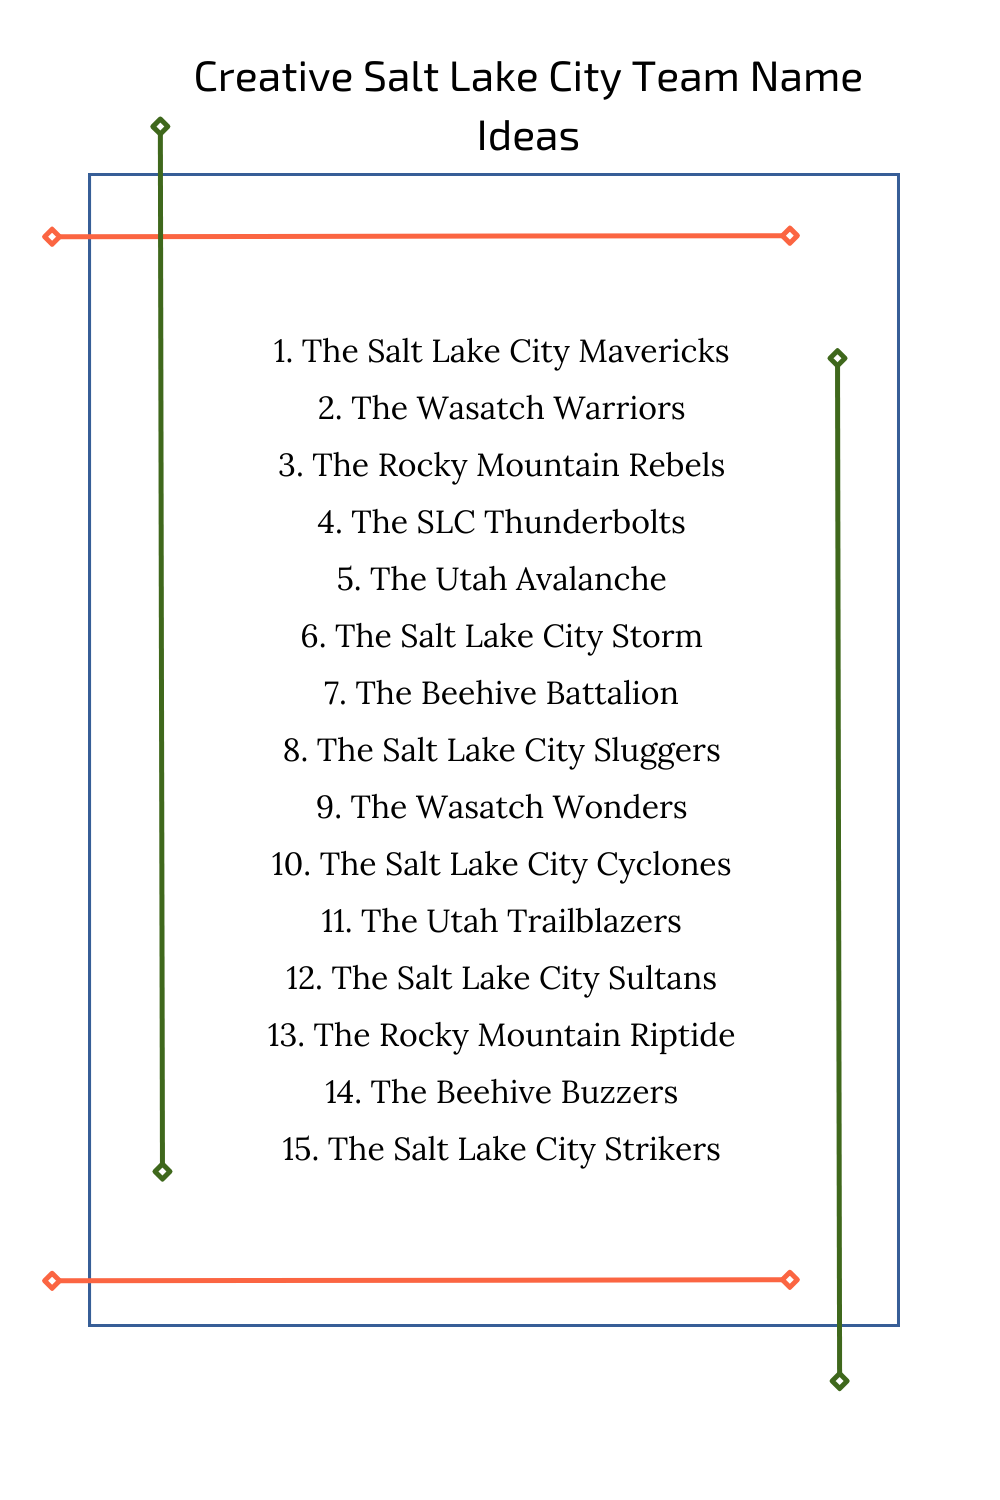 Creative Salt Lake City Team Name Ideas